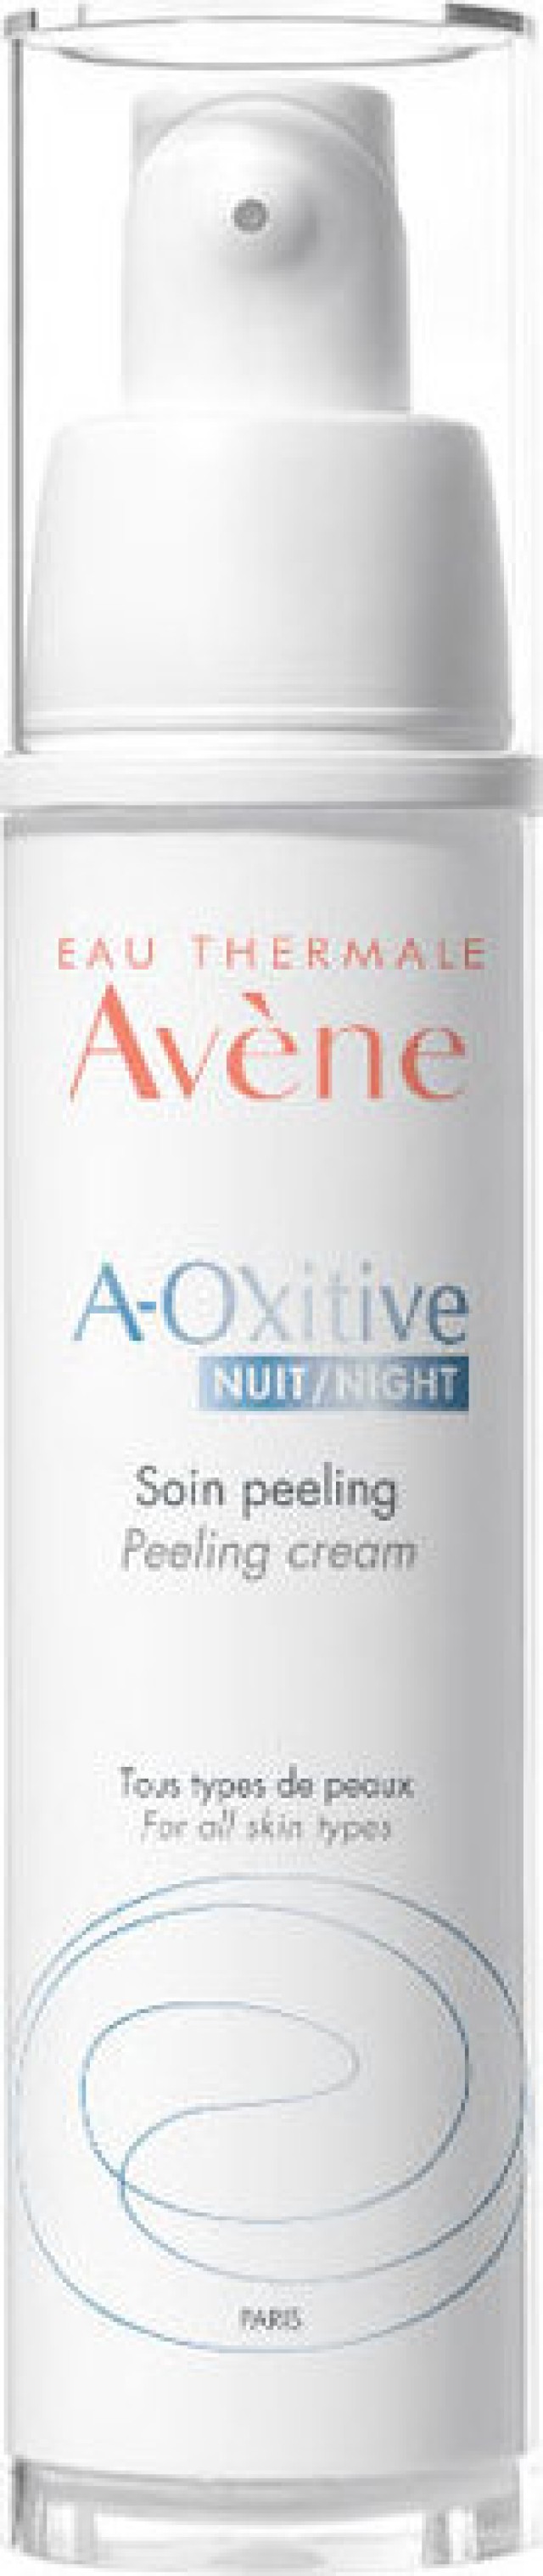 Avene A-Oxitive Night Peeling Cream 30ml Κρέμα Νύχτας με Δράση Peeling